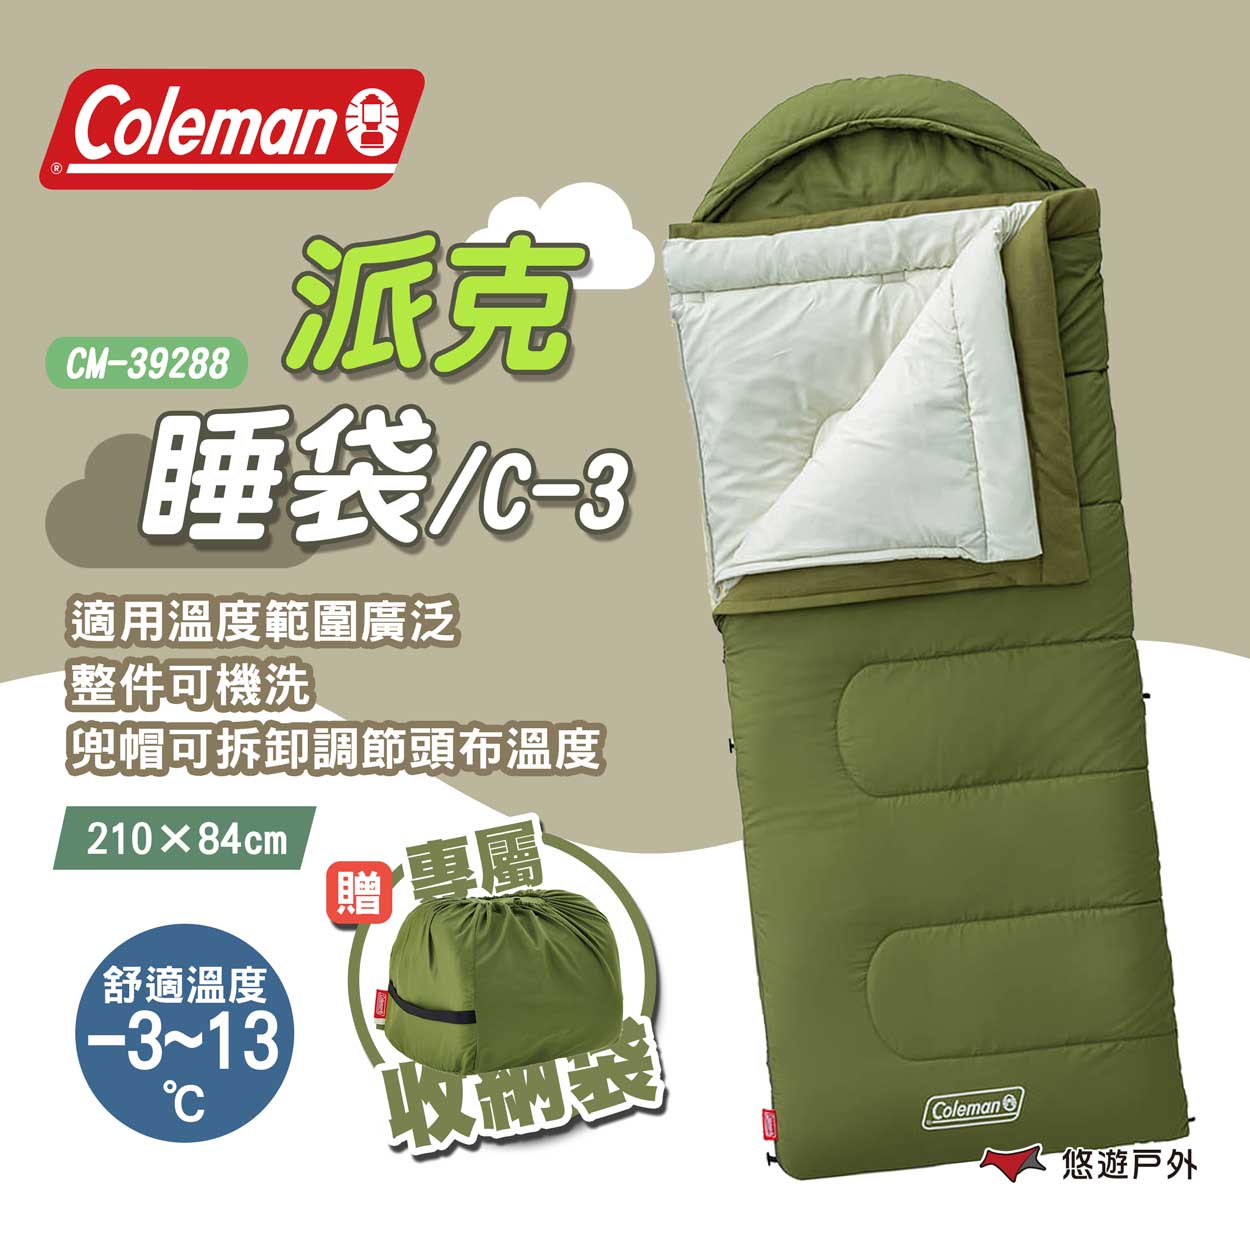 【Coleman】派克睡袋/C-3 CM-39288 露營睡袋 收納睡袋 保暖睡袋 登山睡袋 露營 悠遊戶外